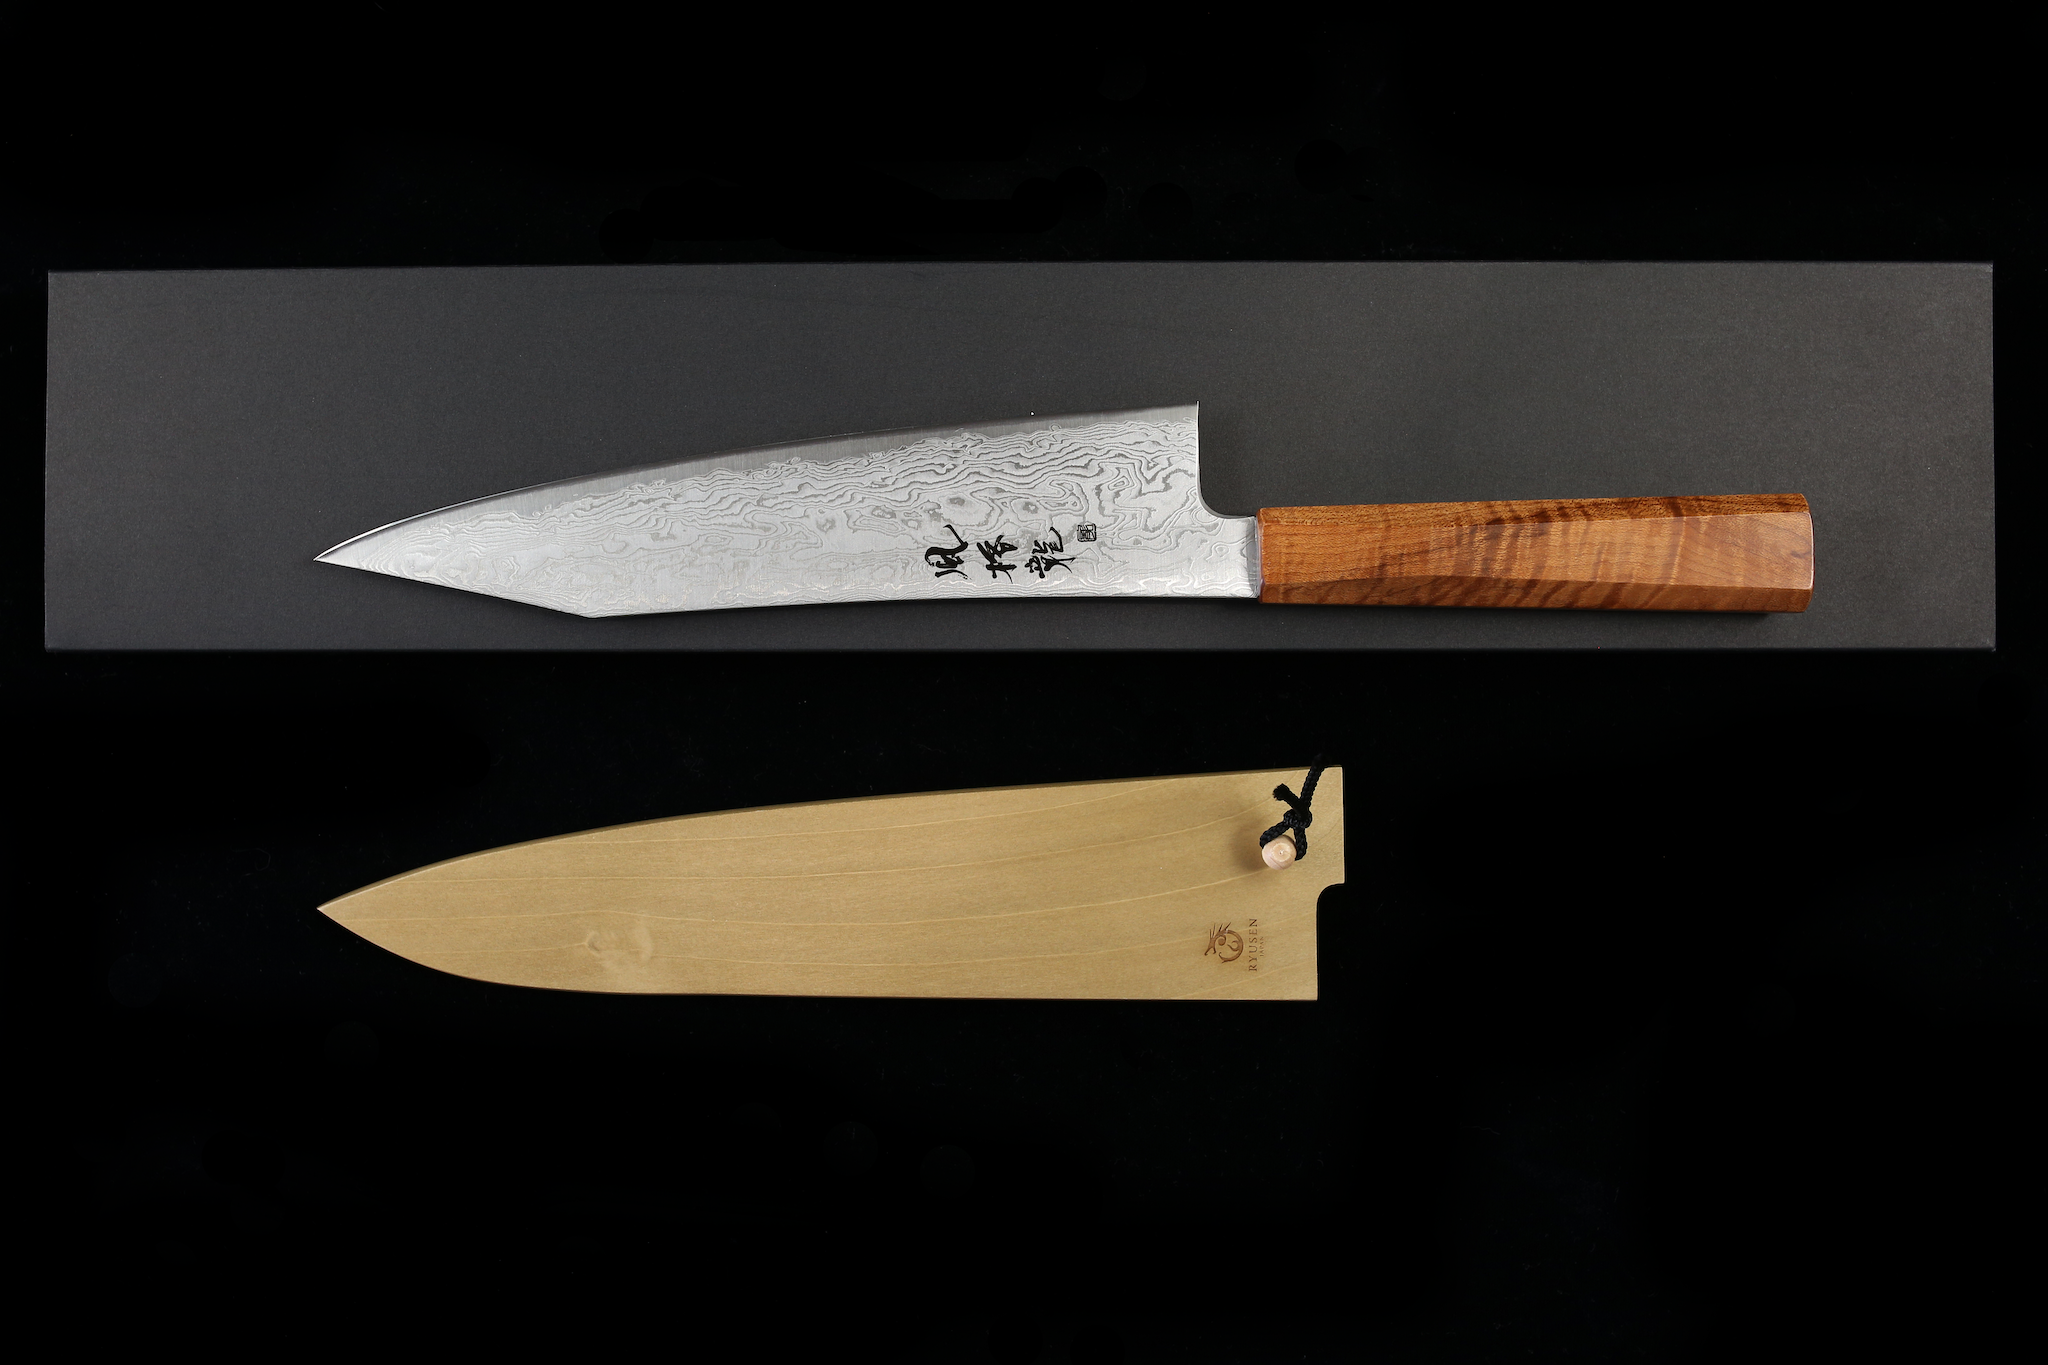 Work Sharp Combo Knife Sharpener: A cut above the rest